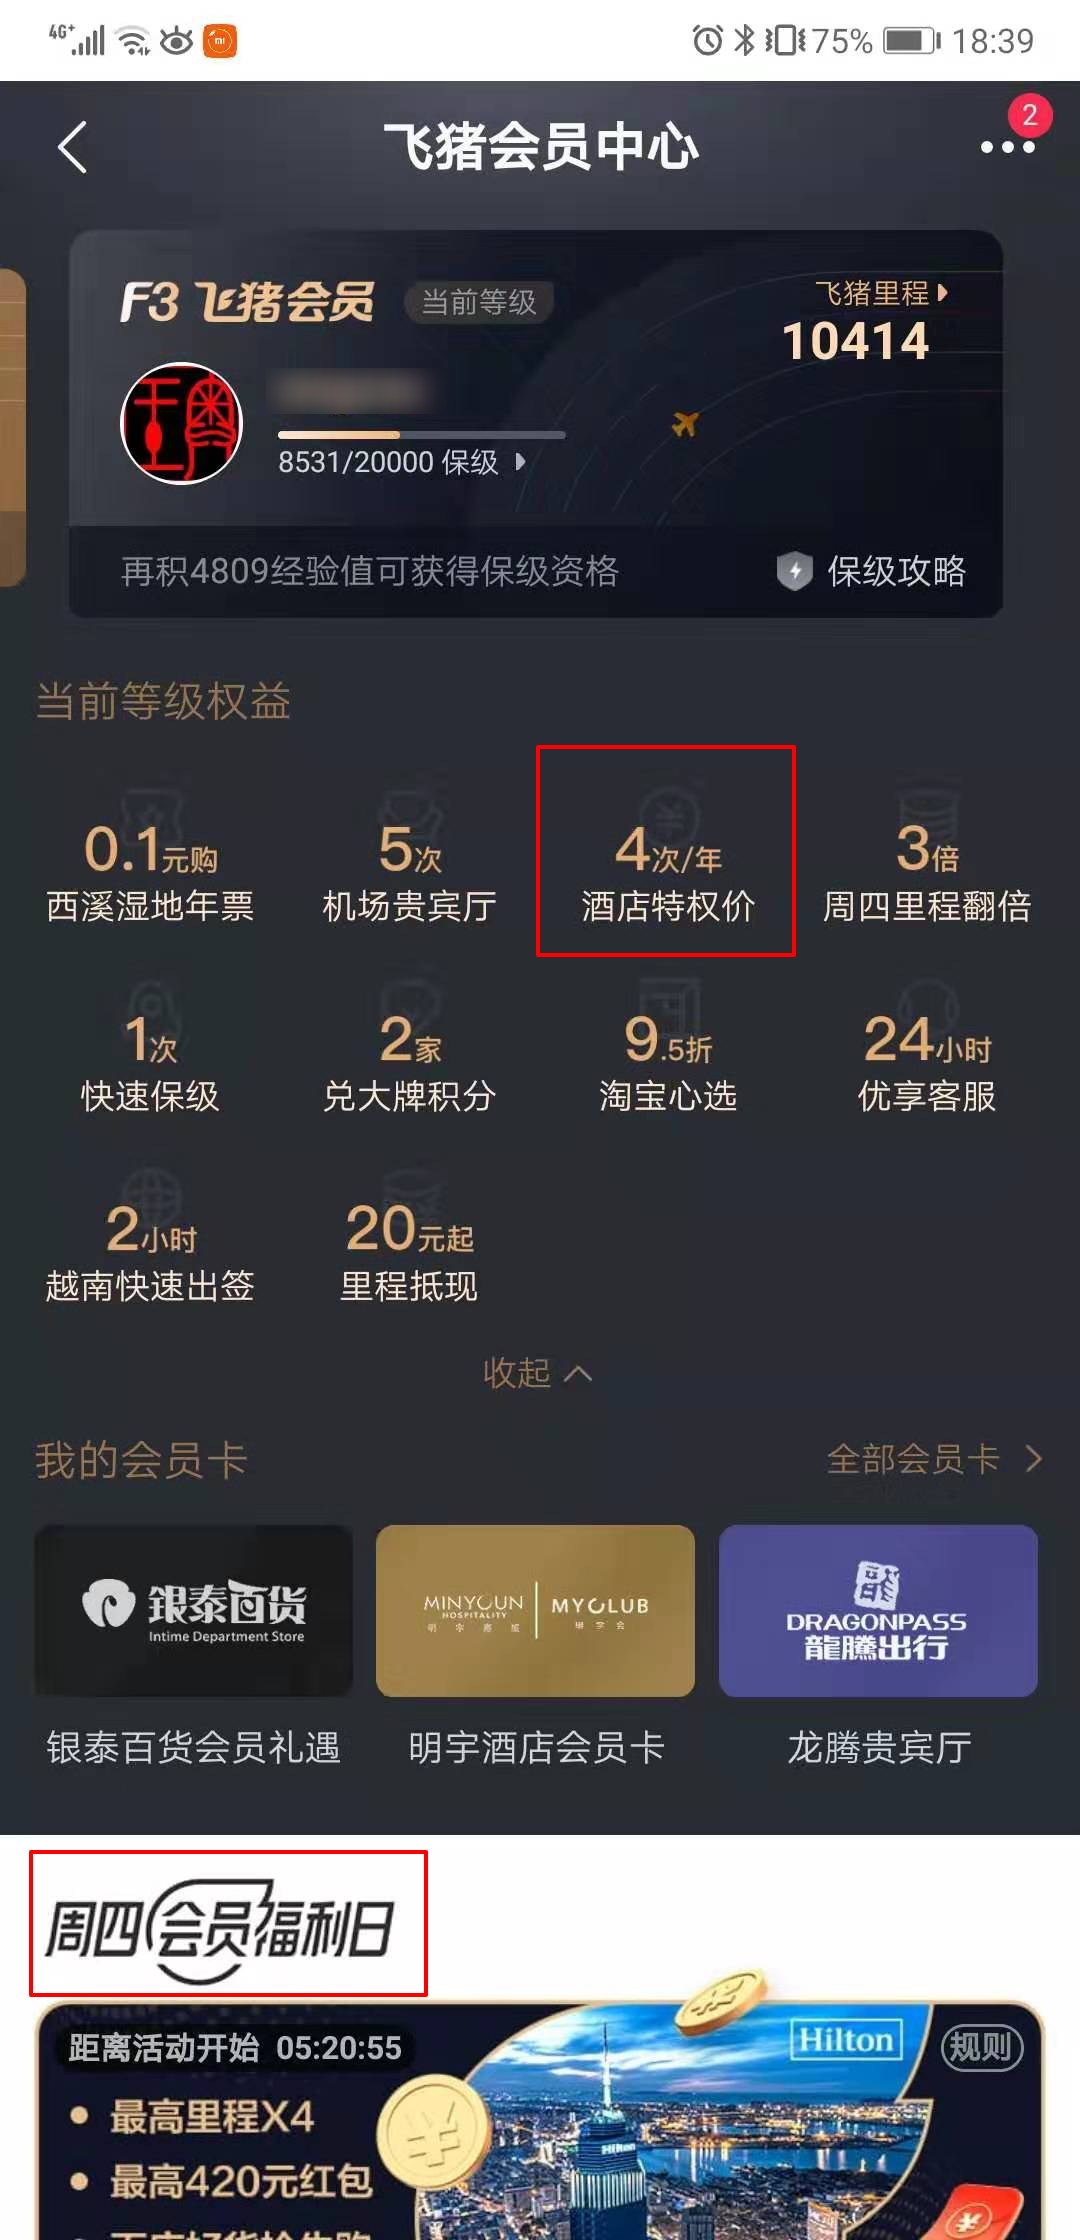  F3 会员特价入住成都东大明宇豪雅饭店免费升级行政套房的体验报告